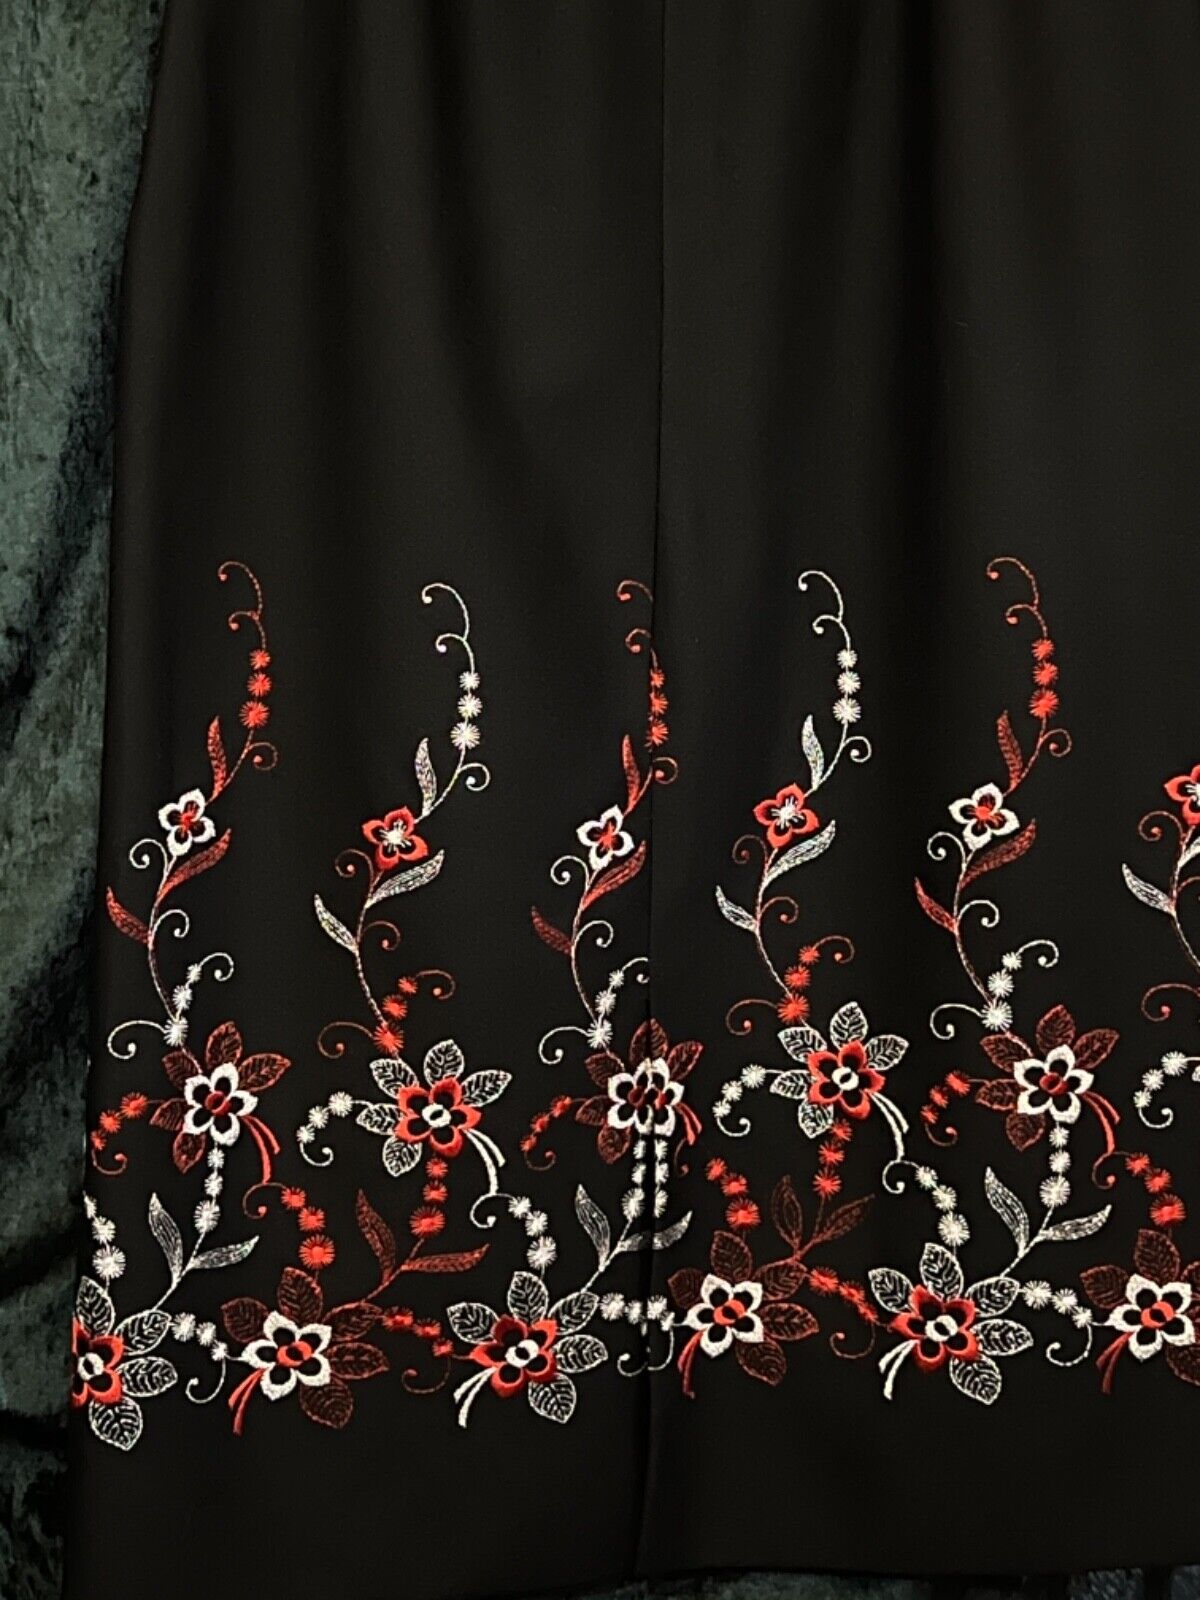 Vintage 1970s black maxi dress embroidered deep border ruched tied shoulders M